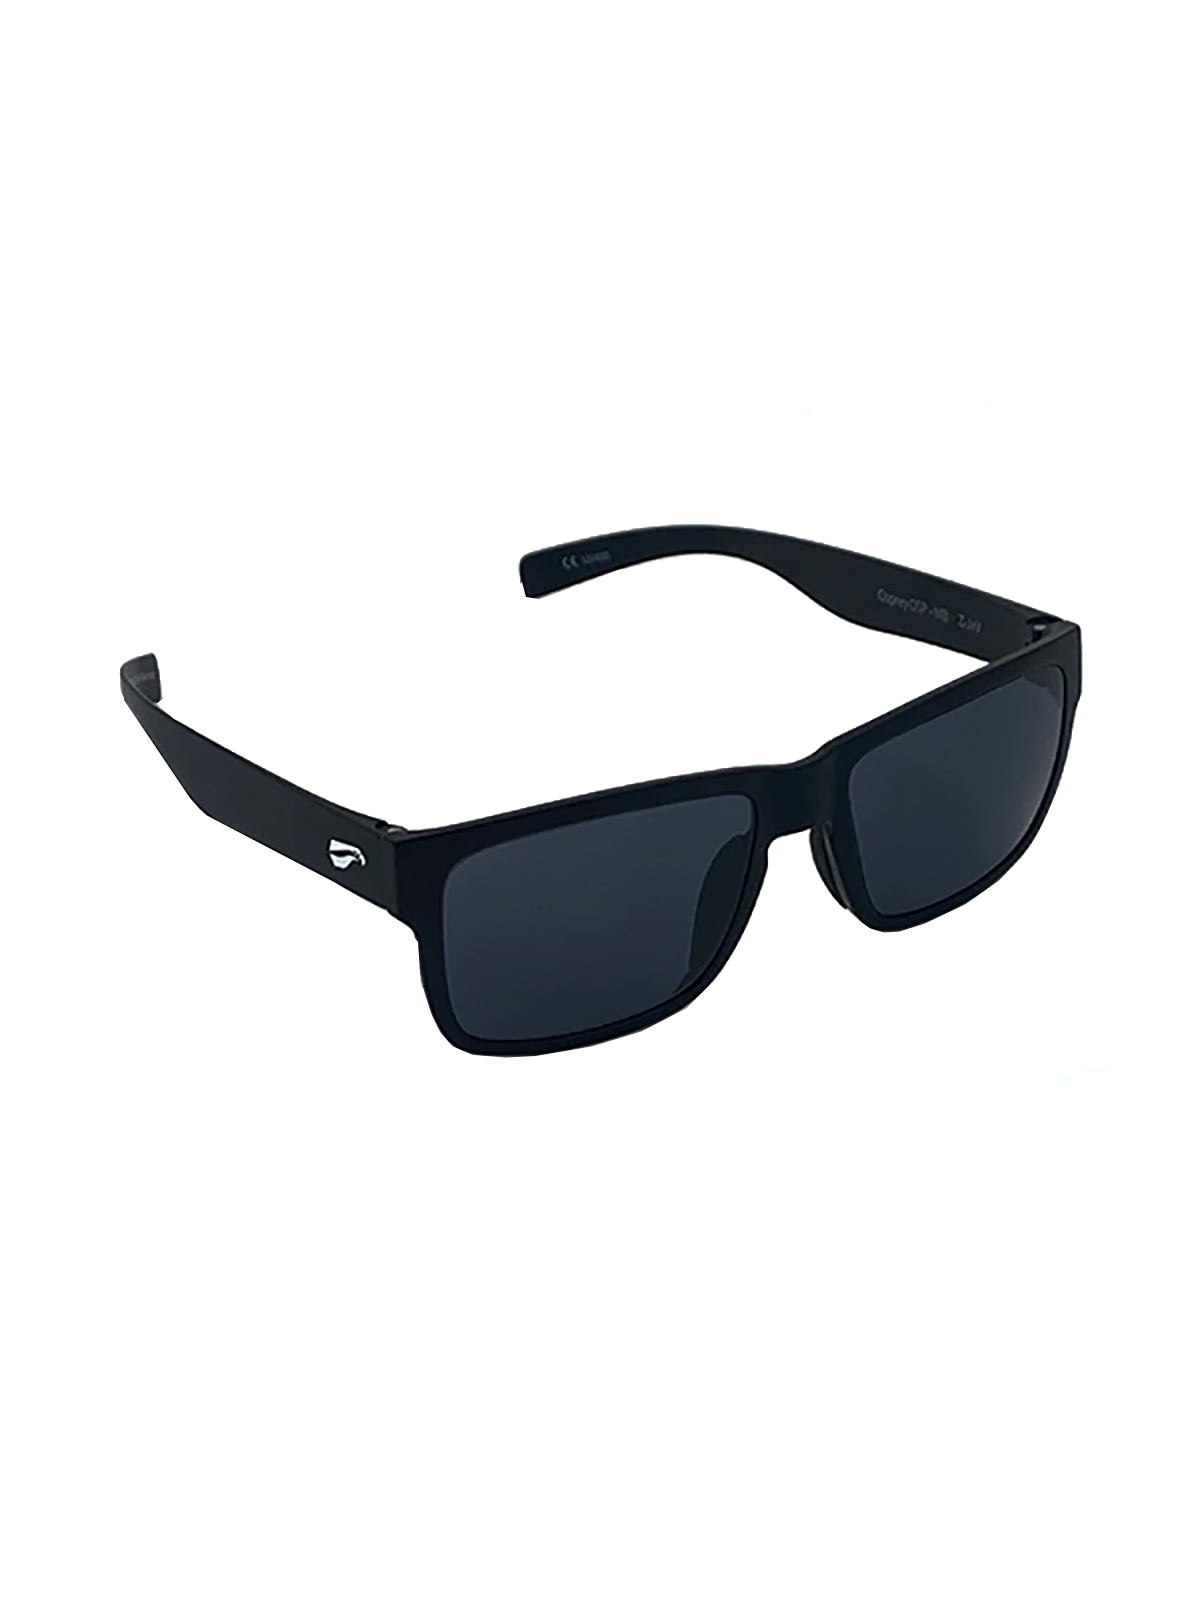 Flying Eyes Sonnenbrille Osprey - Rahmen matt schwarz, Linsen grau (dunkel)